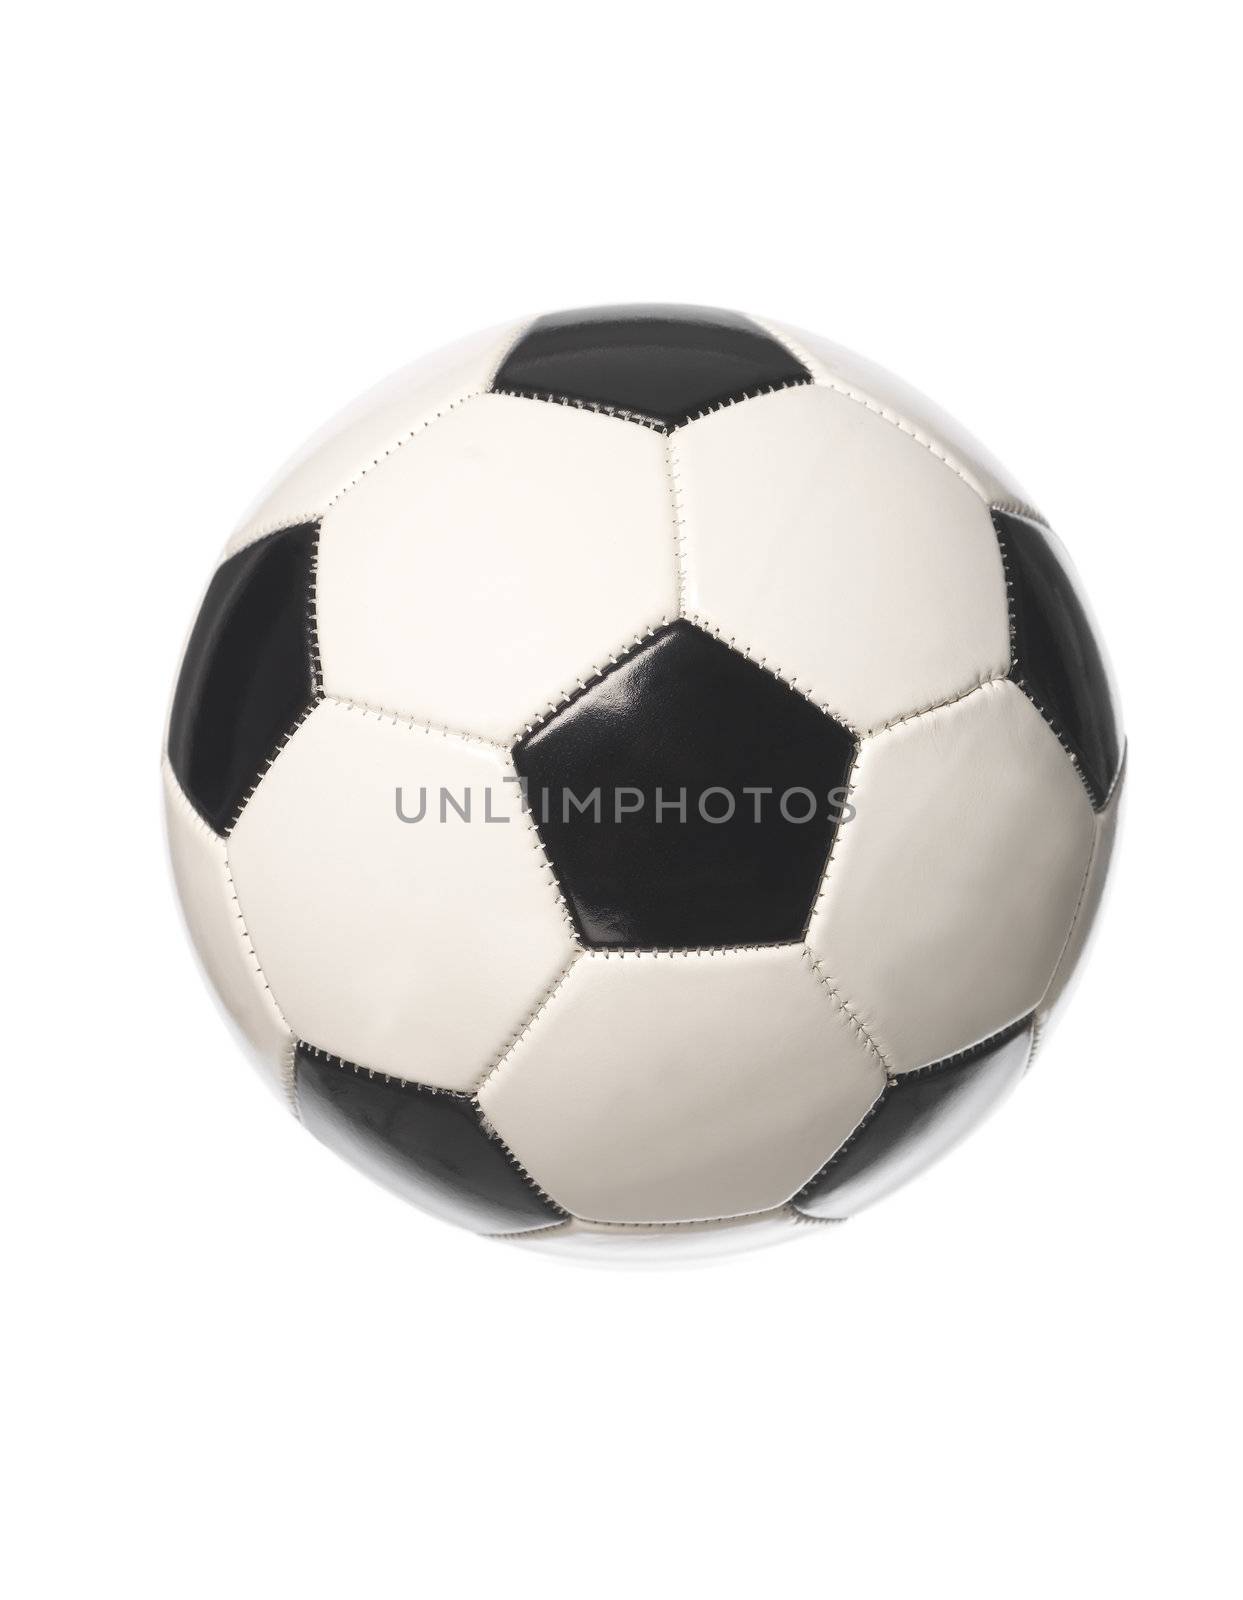 Soccer ball by gemenacom